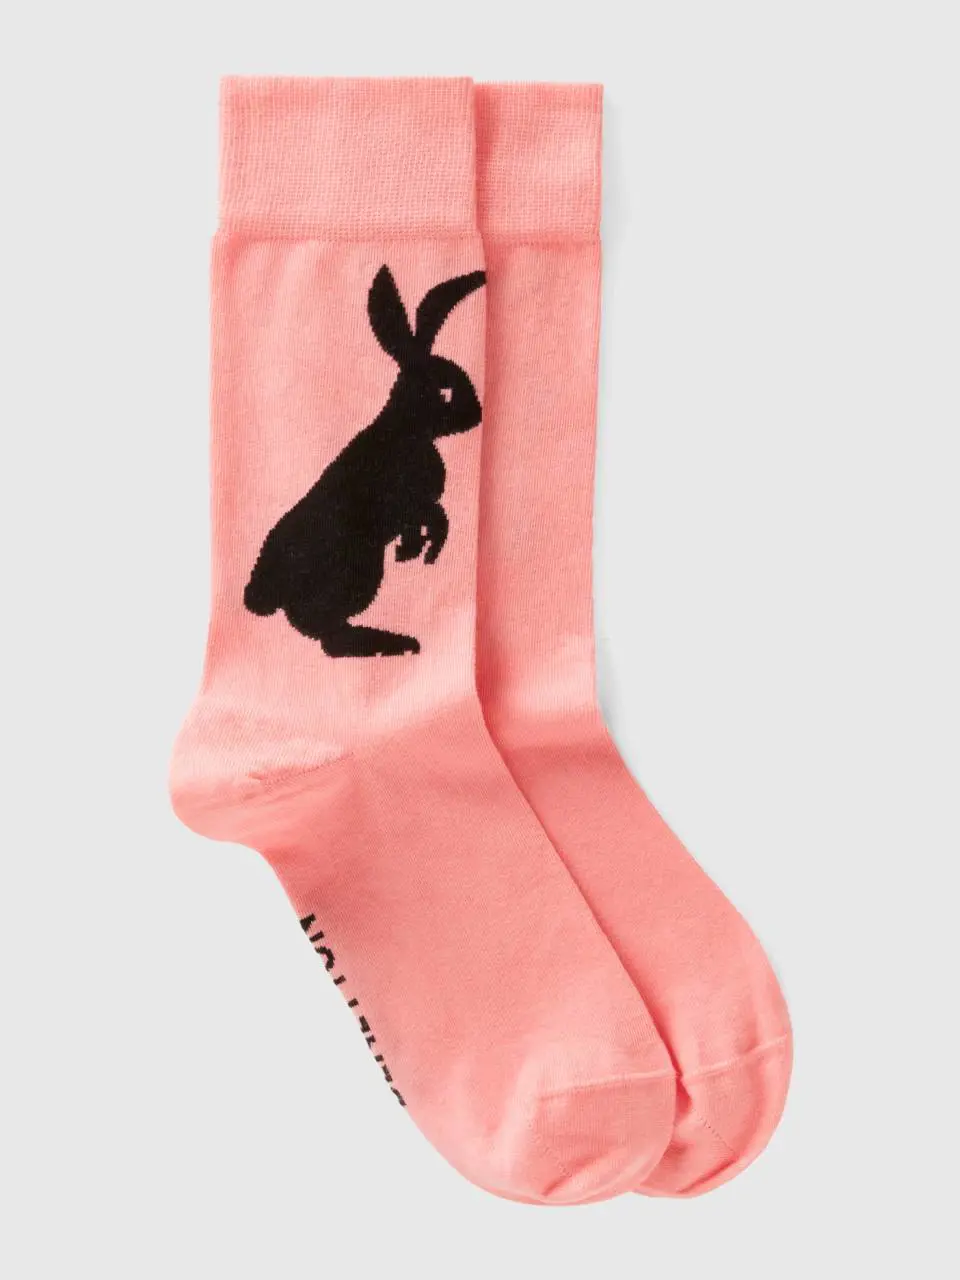 Benetton pink socks with bunny design. 1